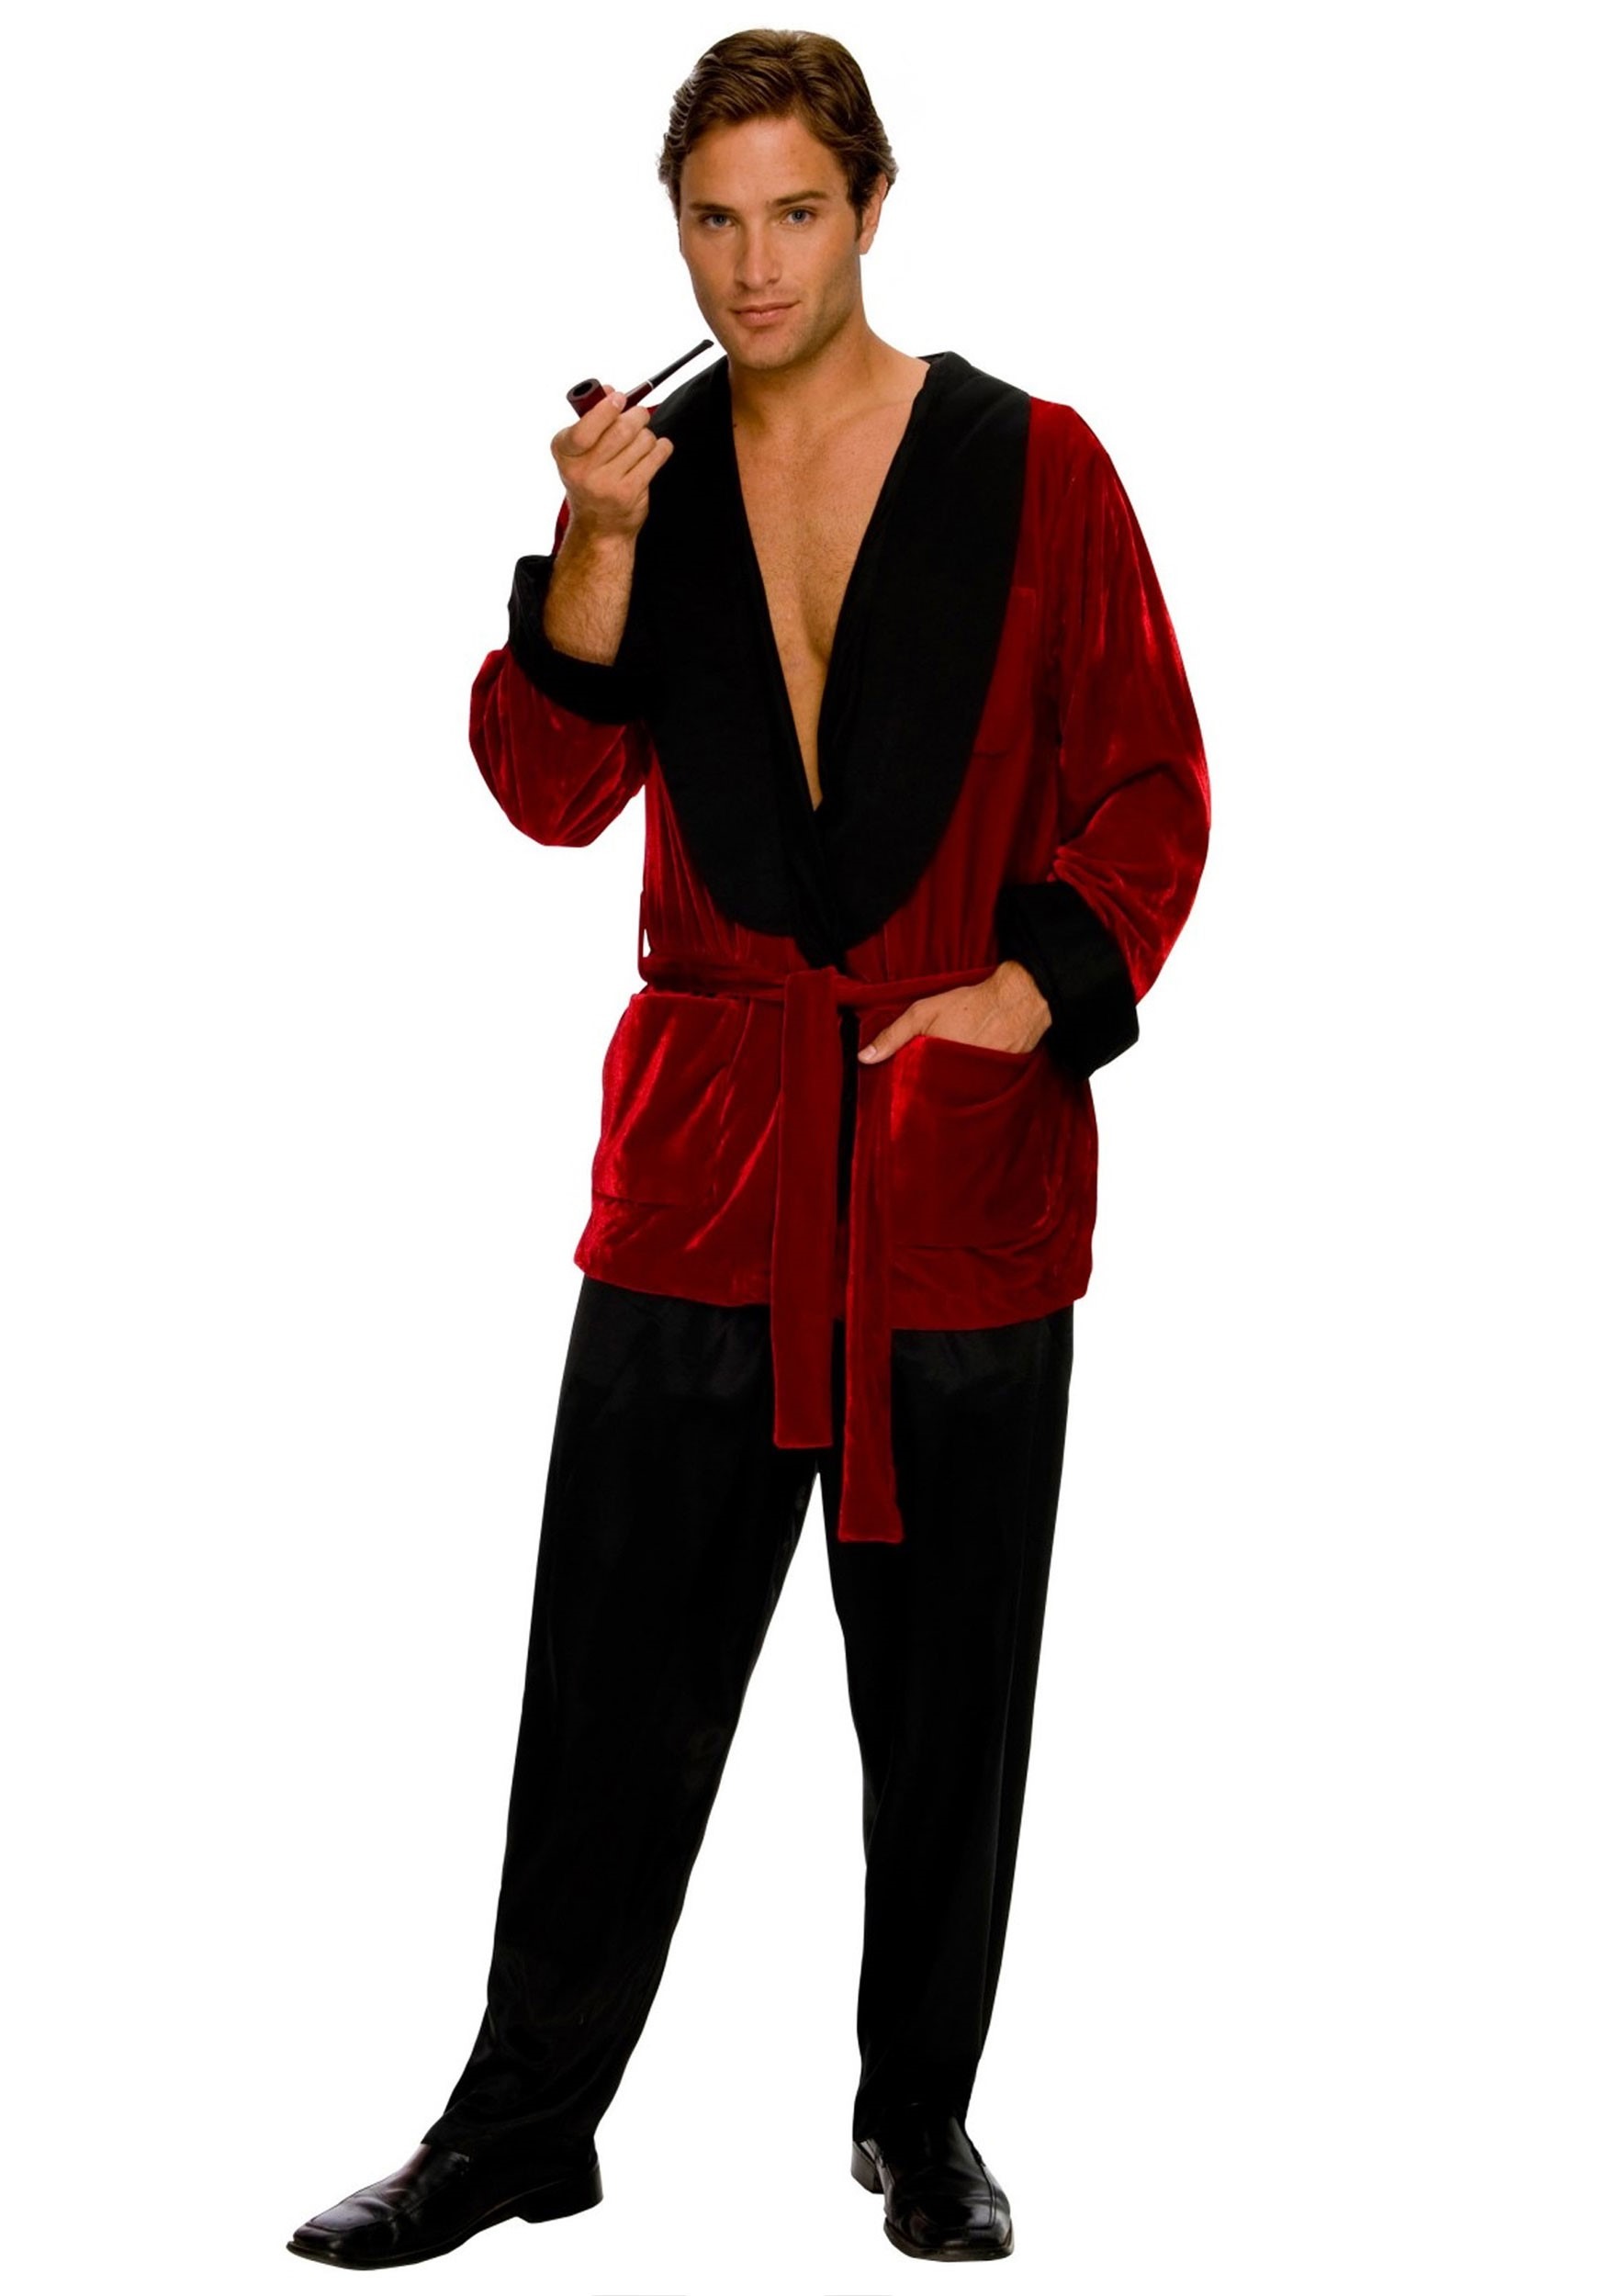 Playboy Hugh Hefner Smoking Jacket Costume for Men